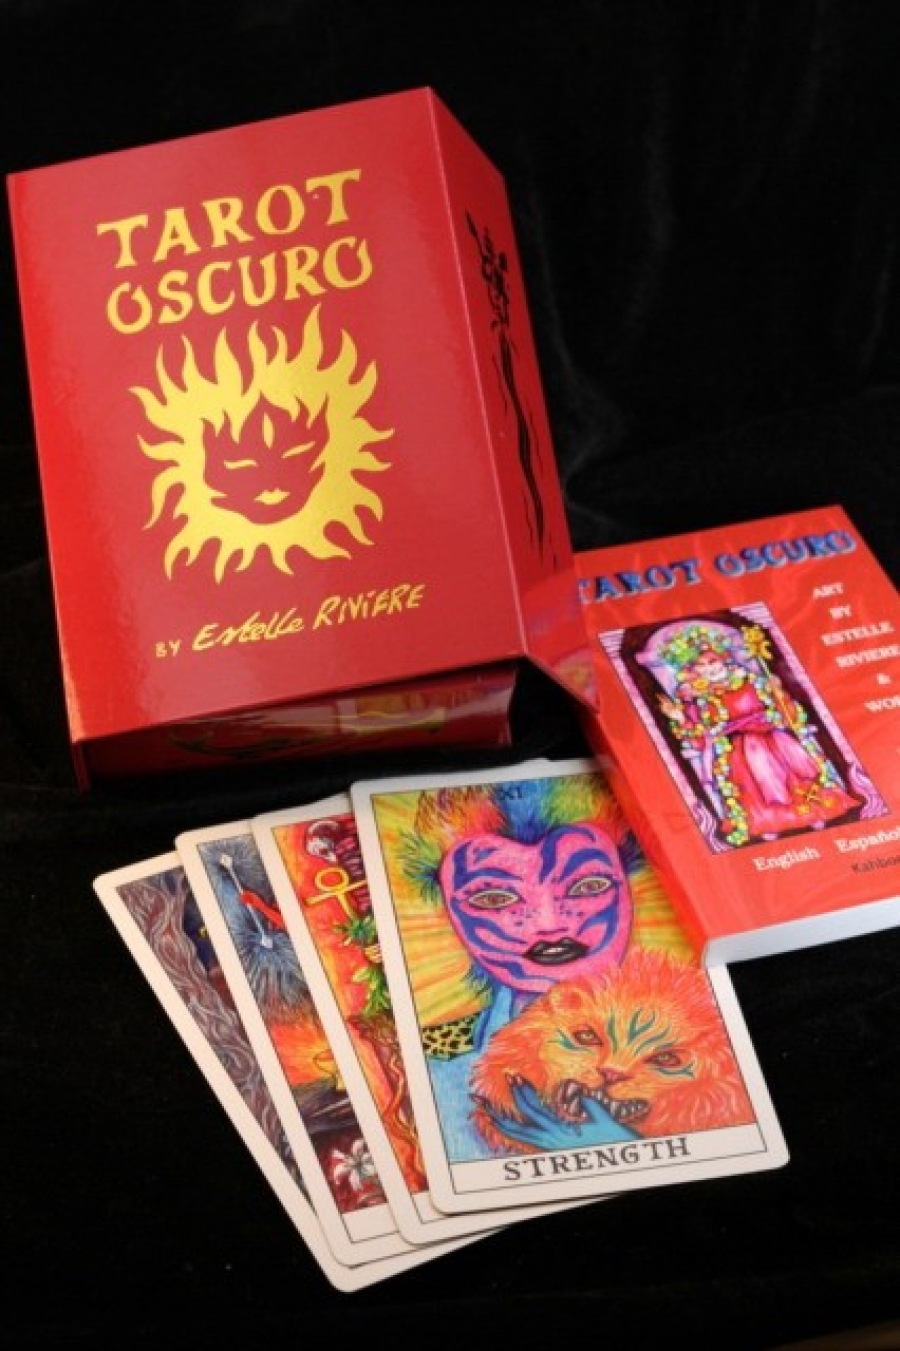 Maria, Riviere, Estelle ; Moraru Tarot Oscuro: English, Spanish & French Edition 